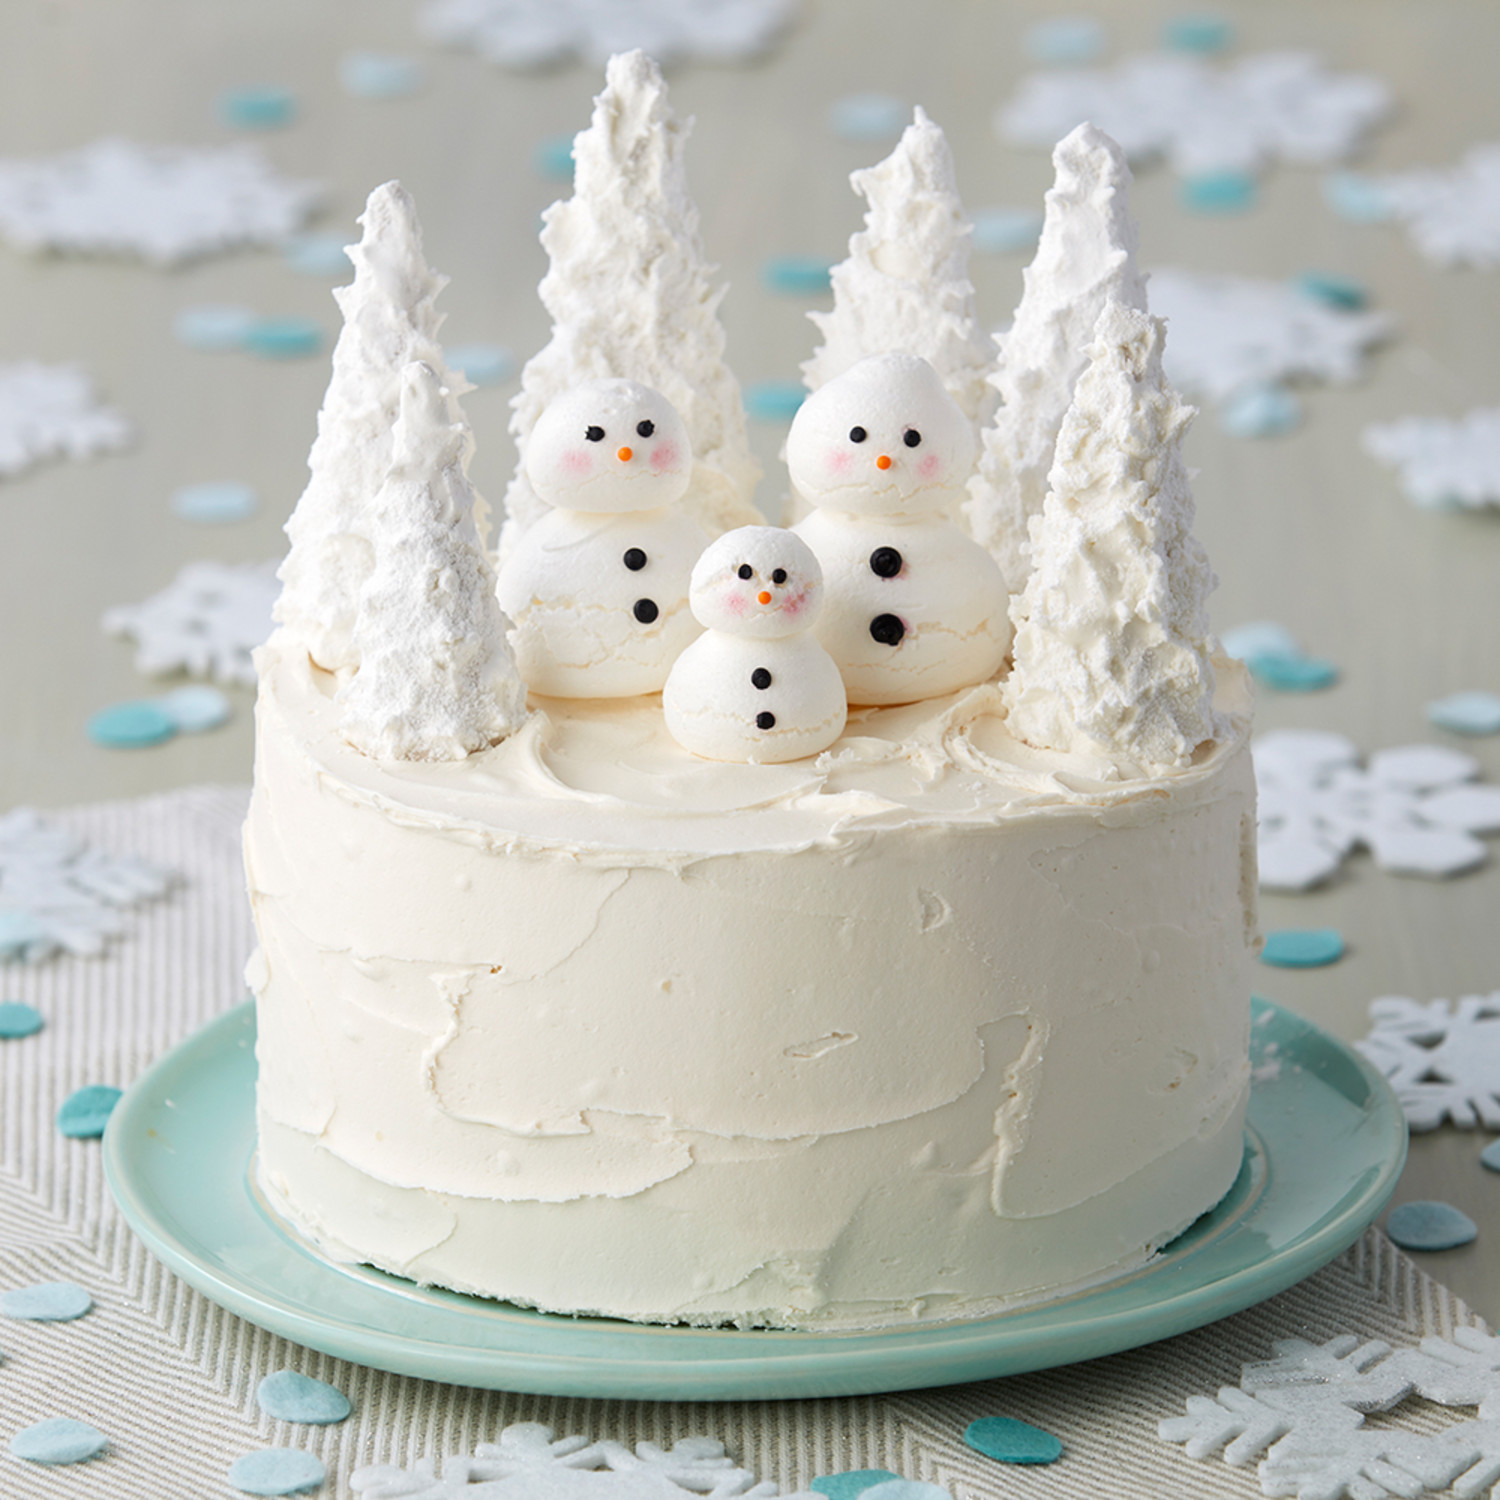 Cute Snowman Cake - Amazing Cake Ideas